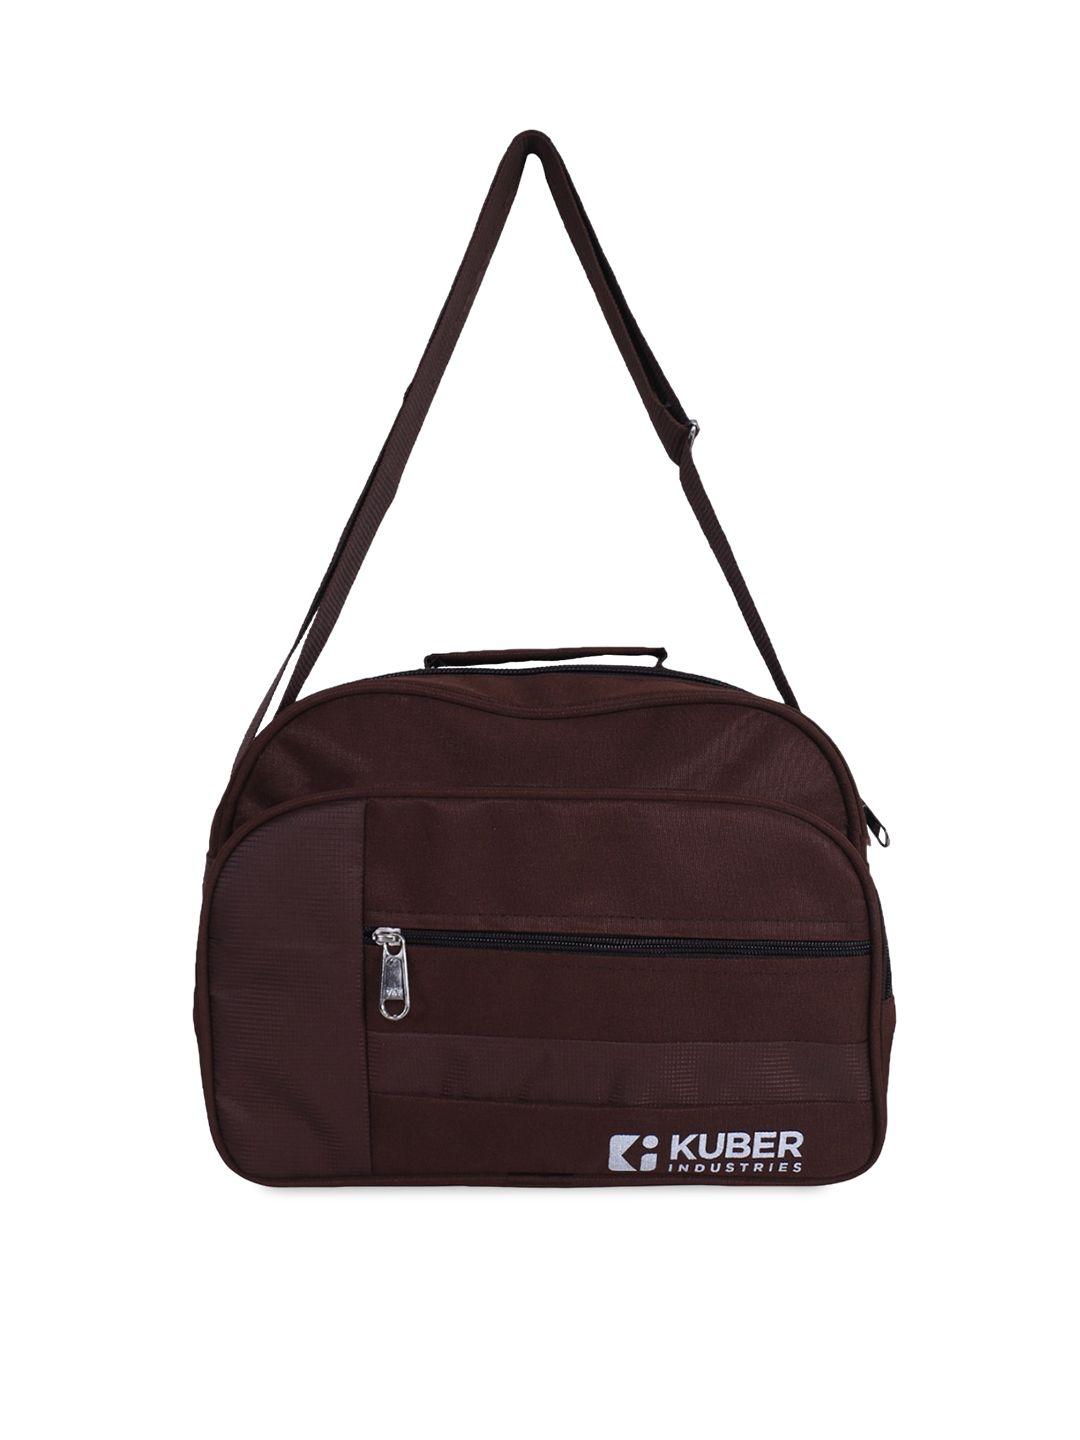 kuber industries structured sling bag